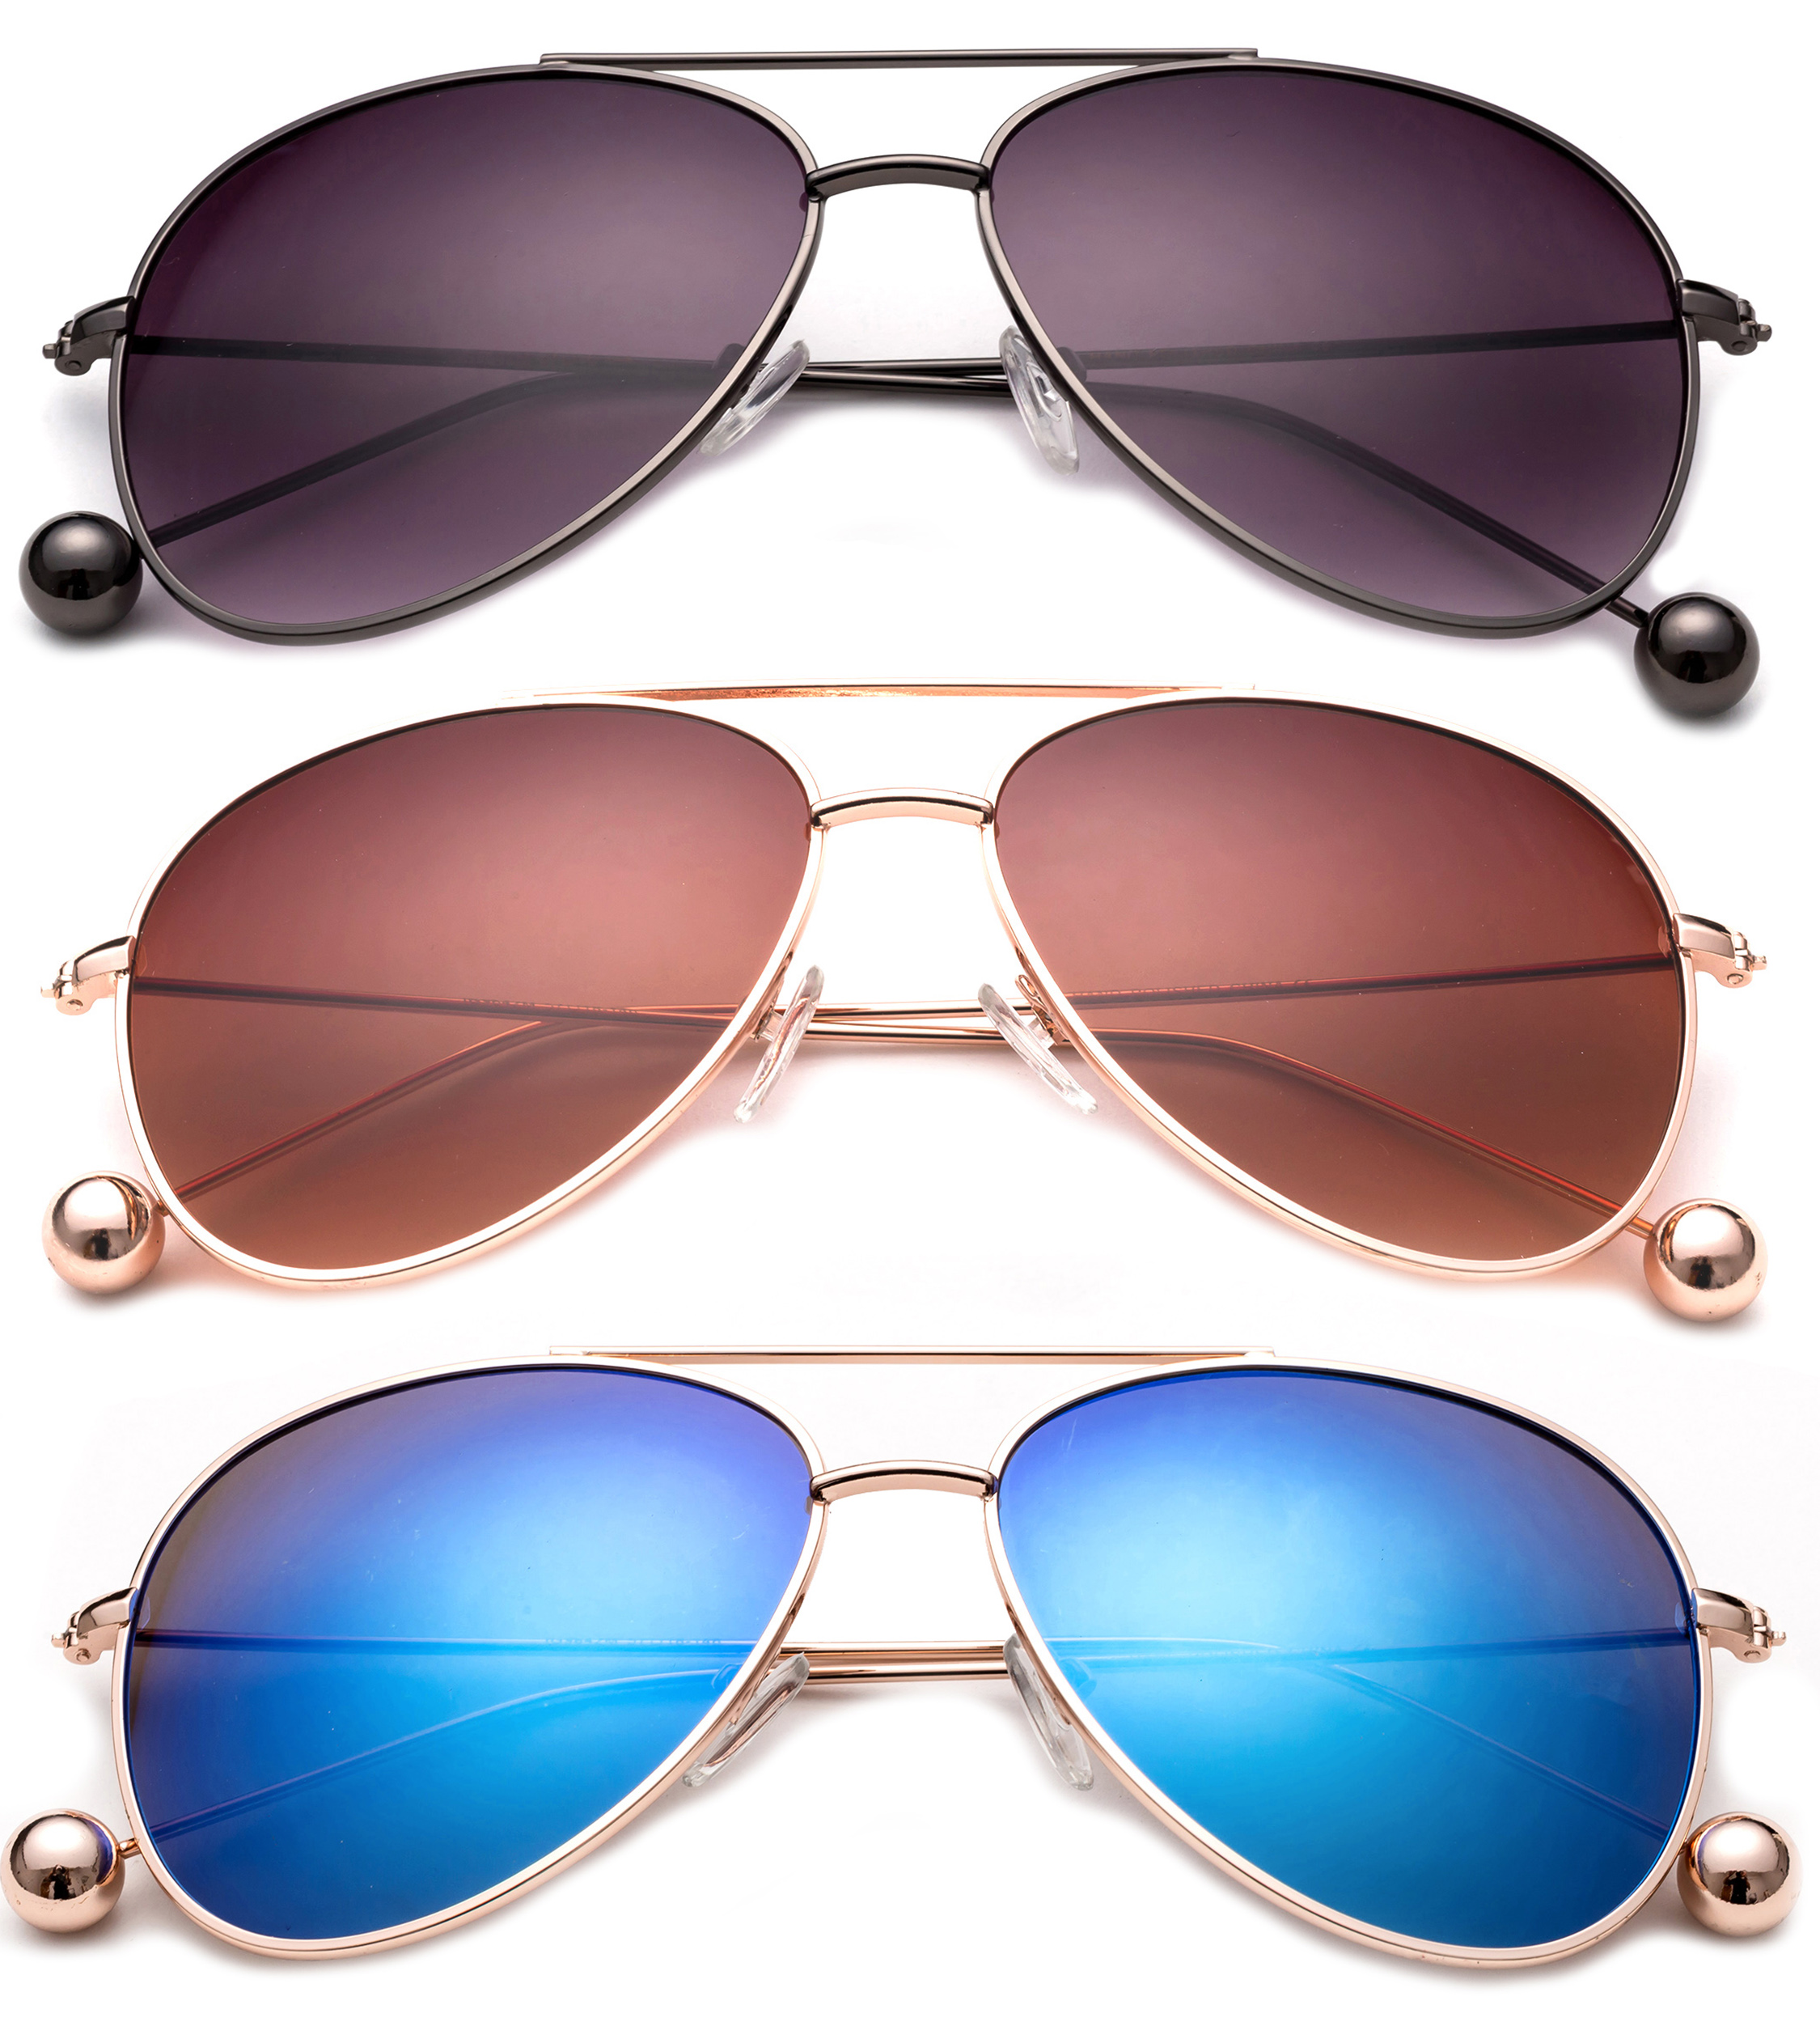 3 Pack Aviator Metal Frame Metal Ball Tip Fashion Sunglasses for Women for Men, Black Smoke, Gunmetal, Brown & Blue - image 1 of 2